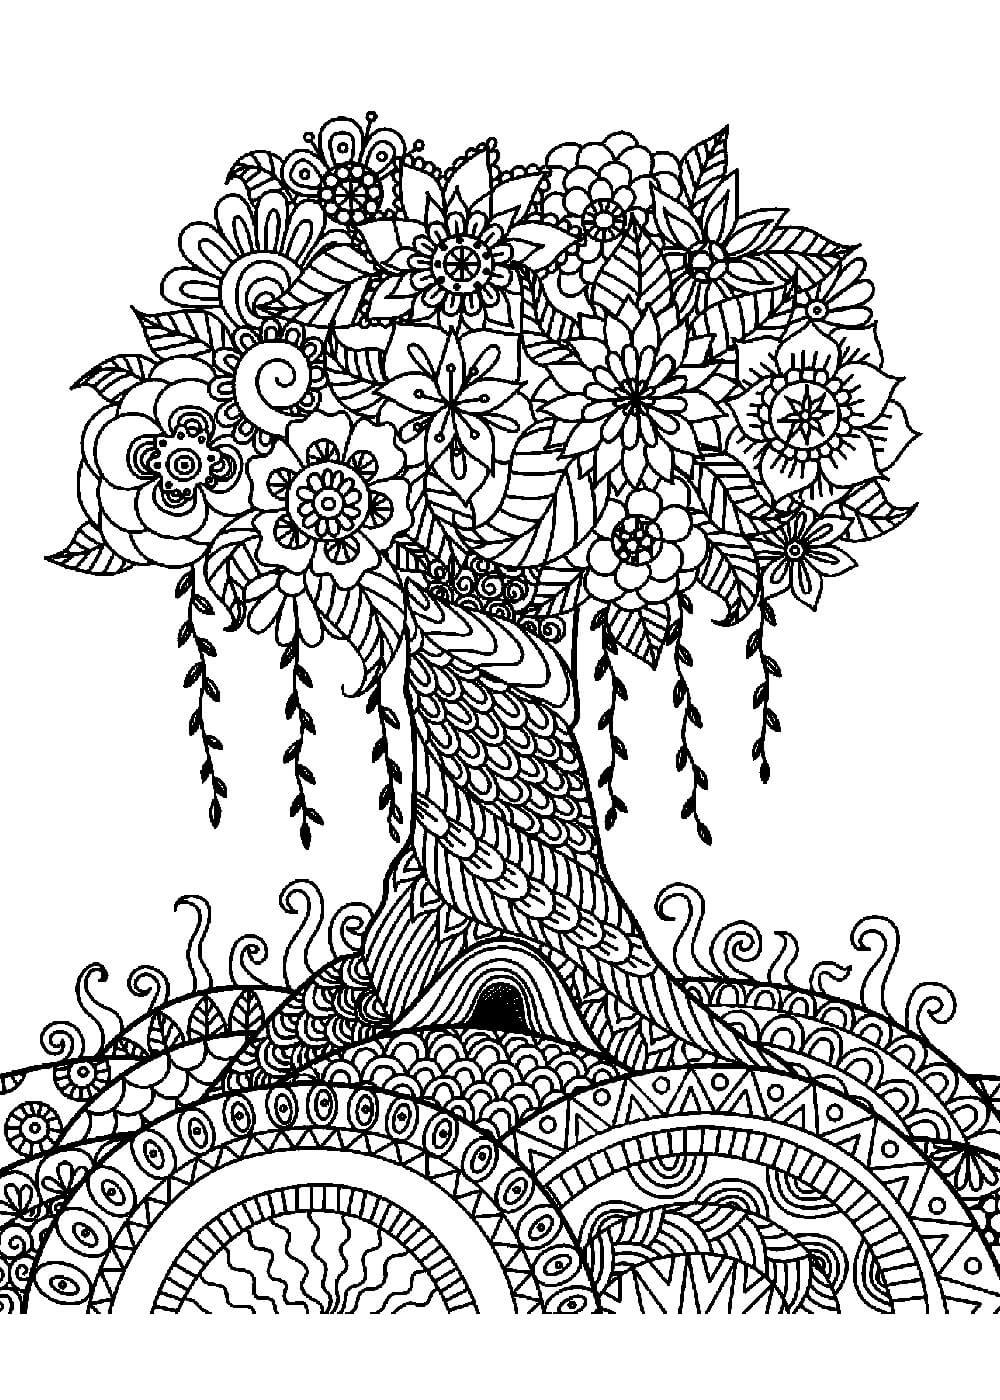 Мандола с изображением дерева